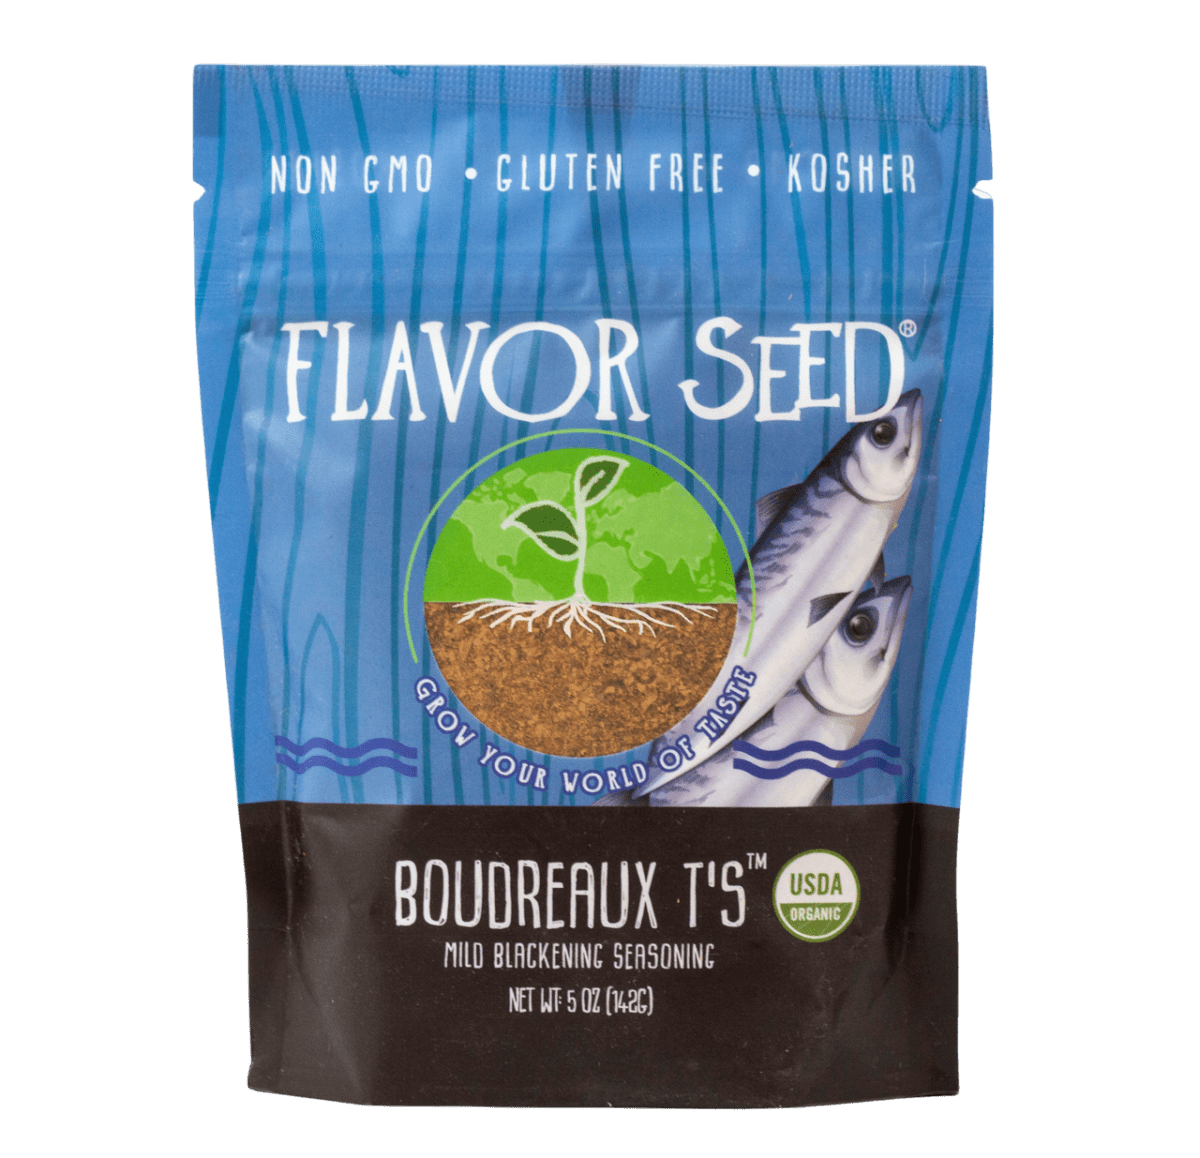 FLAVOR SEED - Boudreaux T's Organic Mild Blackening Seasoning - Flavor Seed